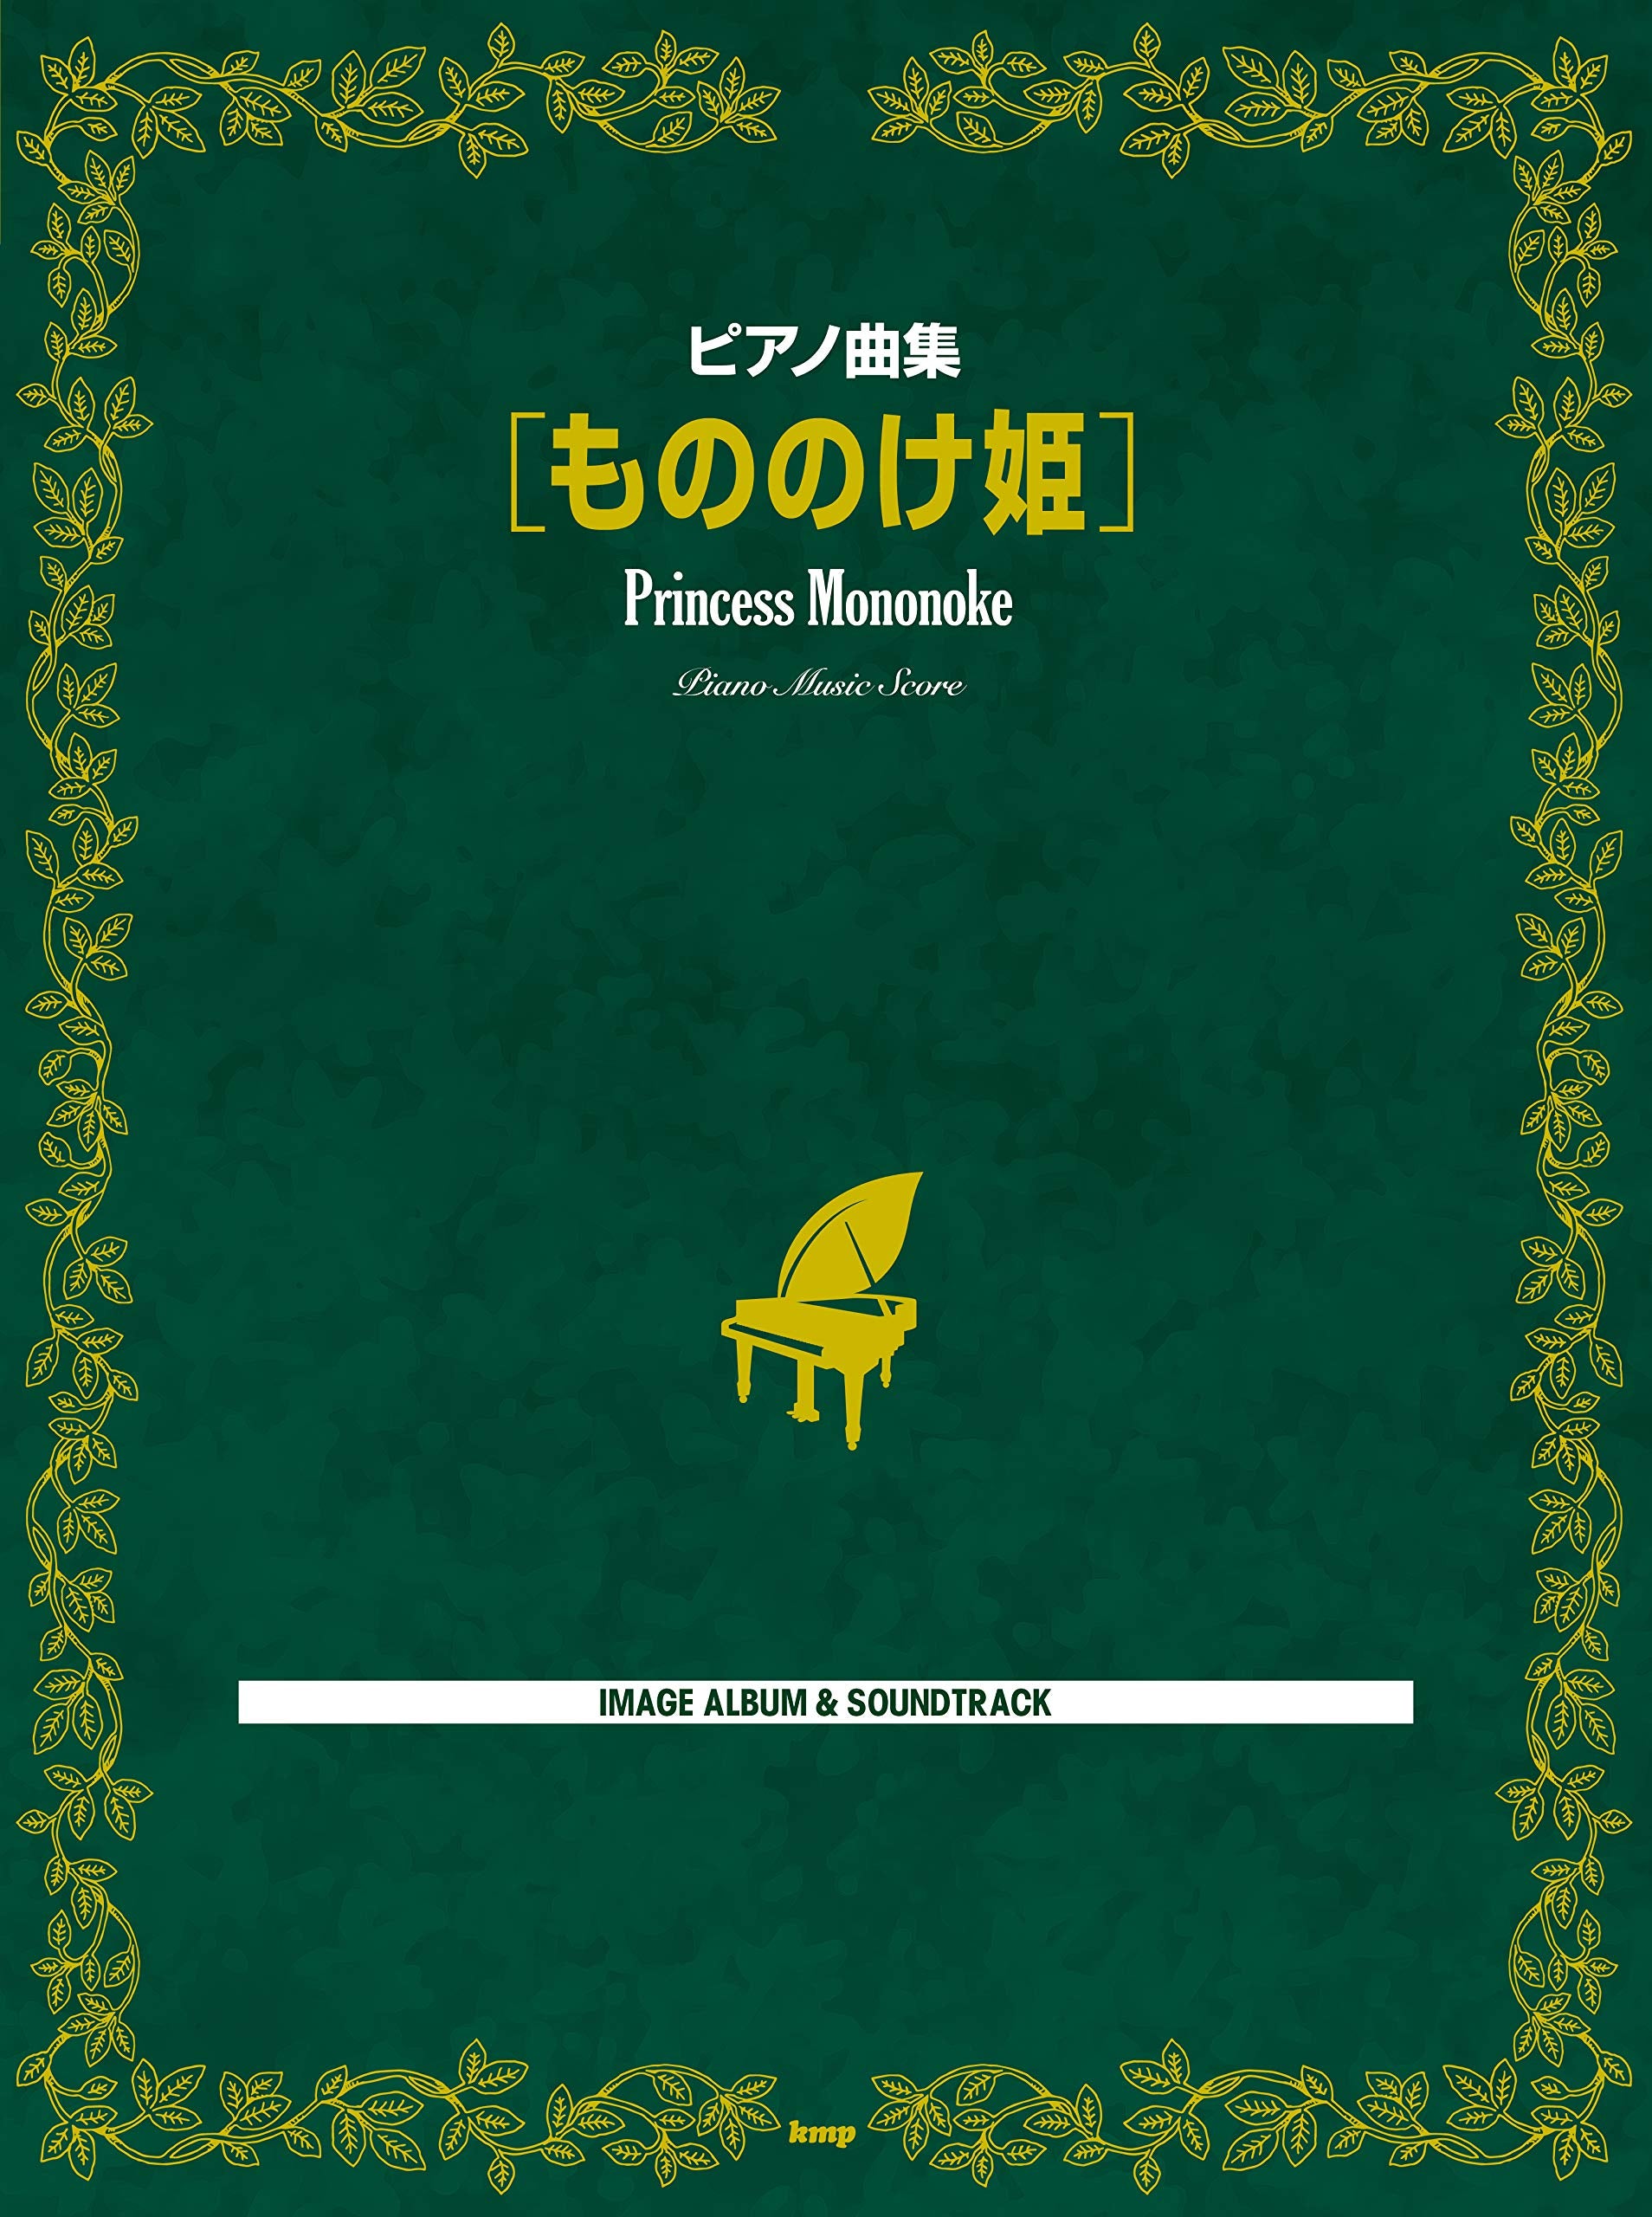 The collection of Princess Mononoke songs for Piano Solo